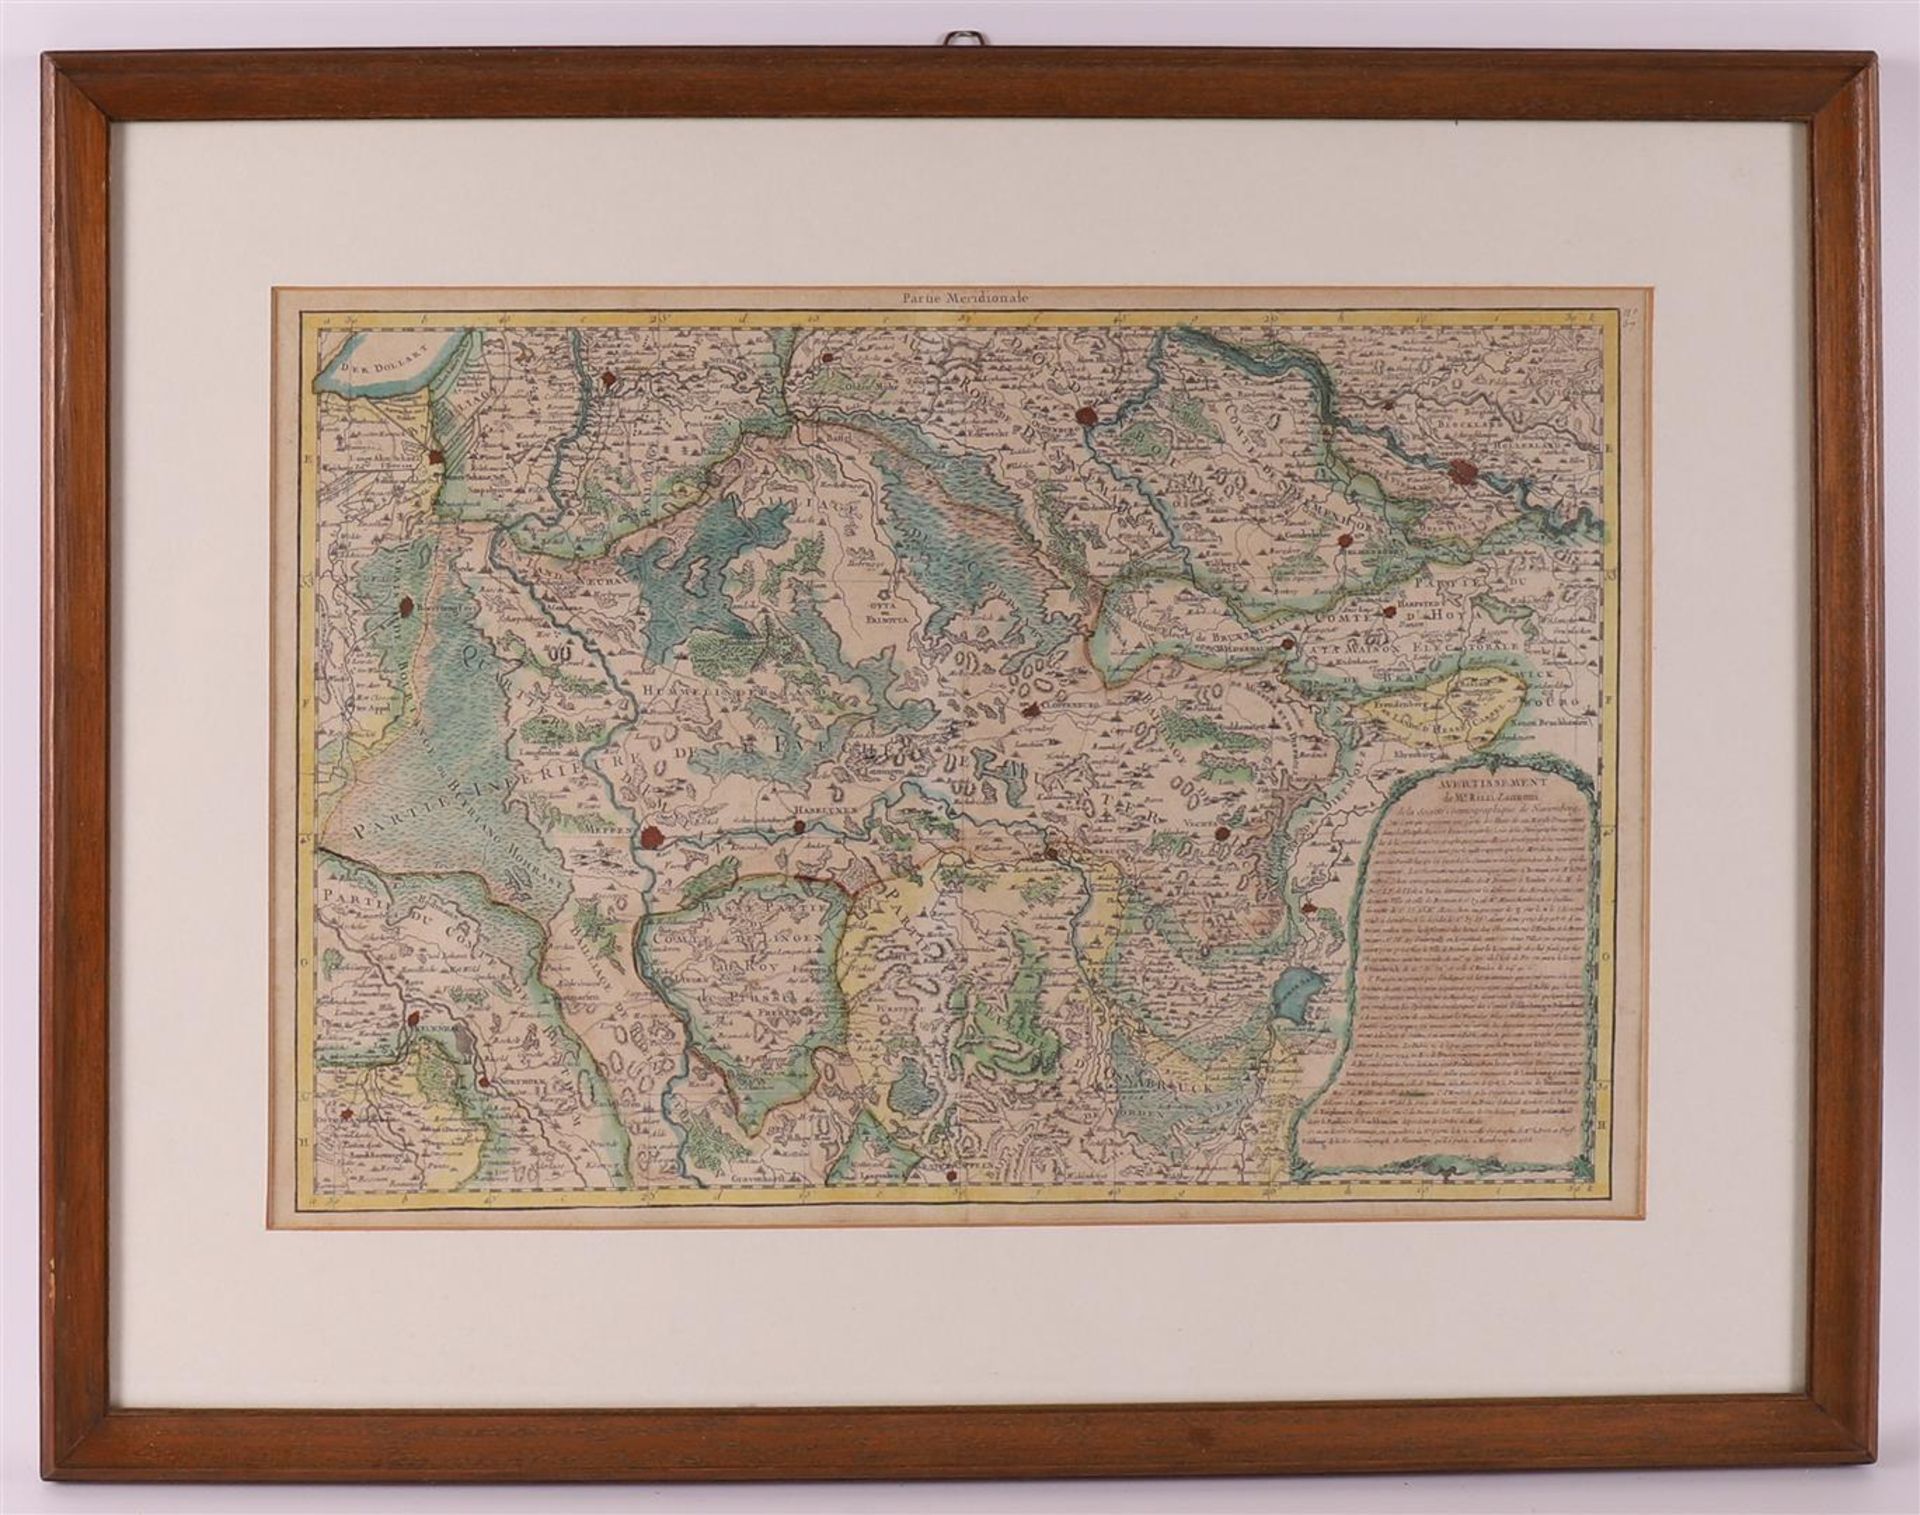 Topography. Map of Germany, avertissement by Mr. Rizzi Zannoni, 18th century, h 25 x w 38 cm.